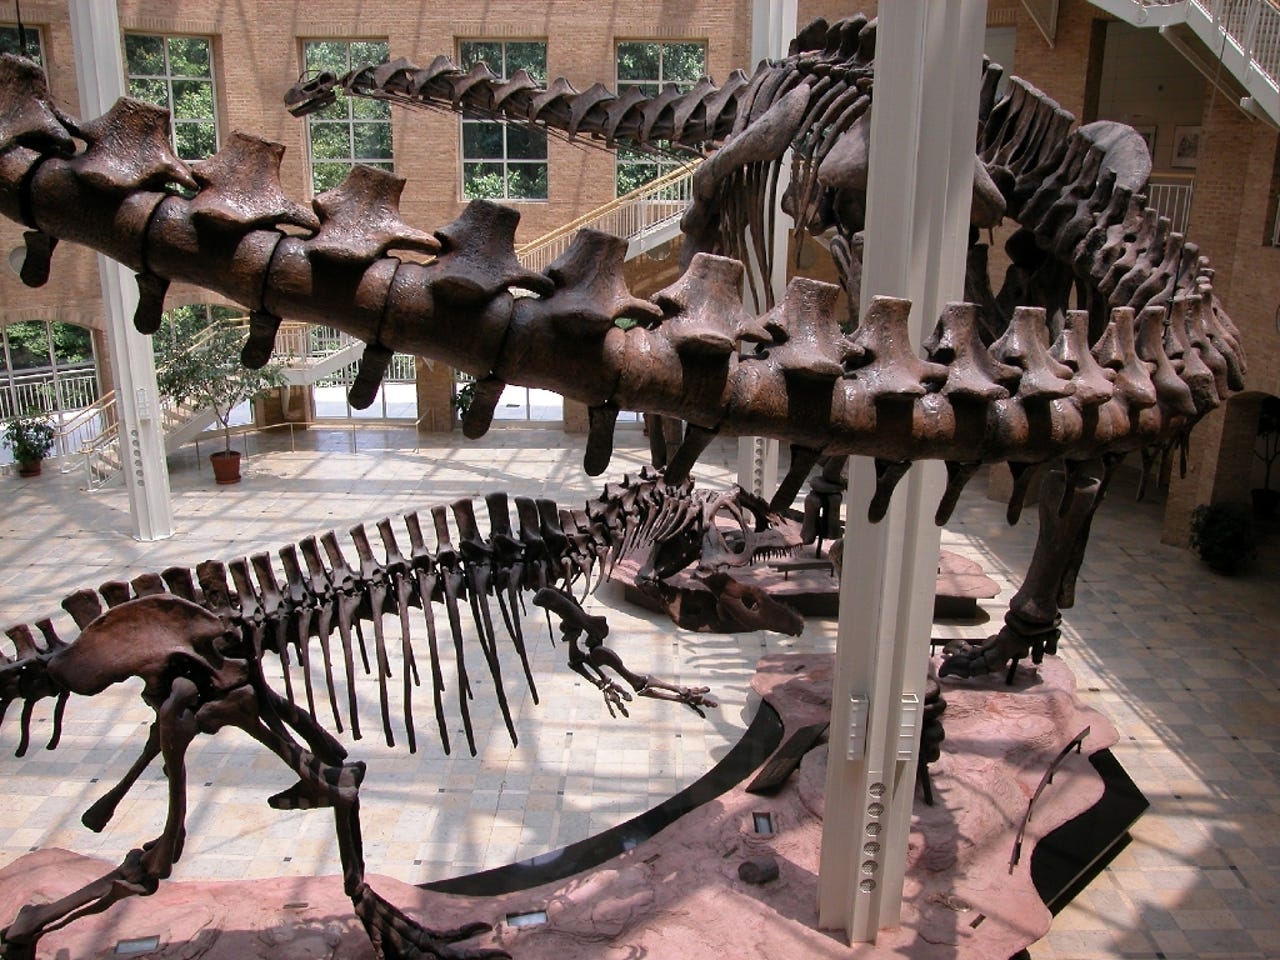 Giants of the Mesozoic dinosaurs